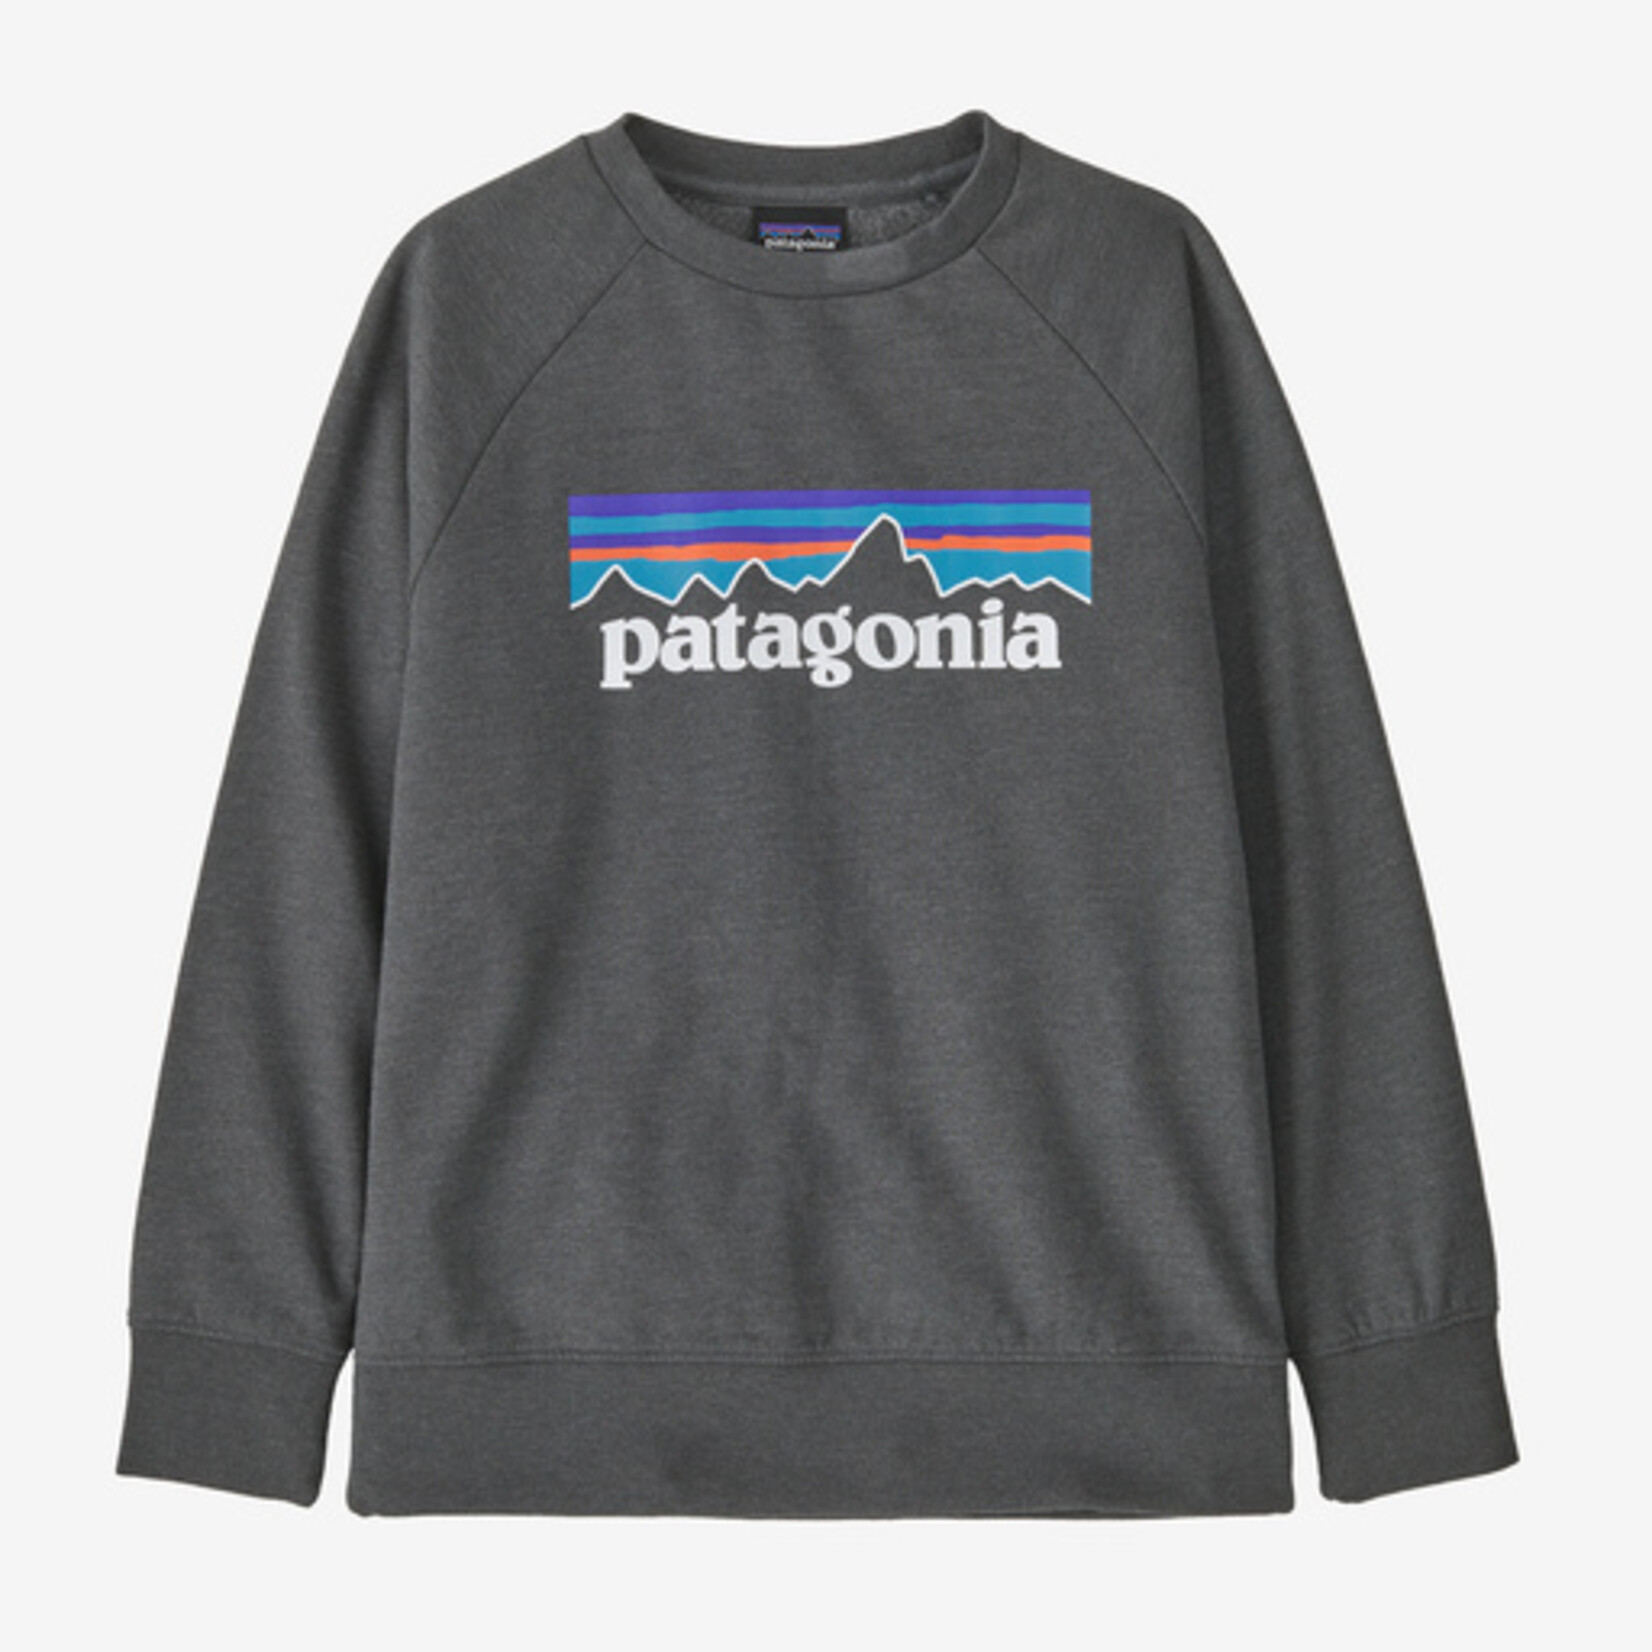 Patagonia K’s lw crew sweatshirt